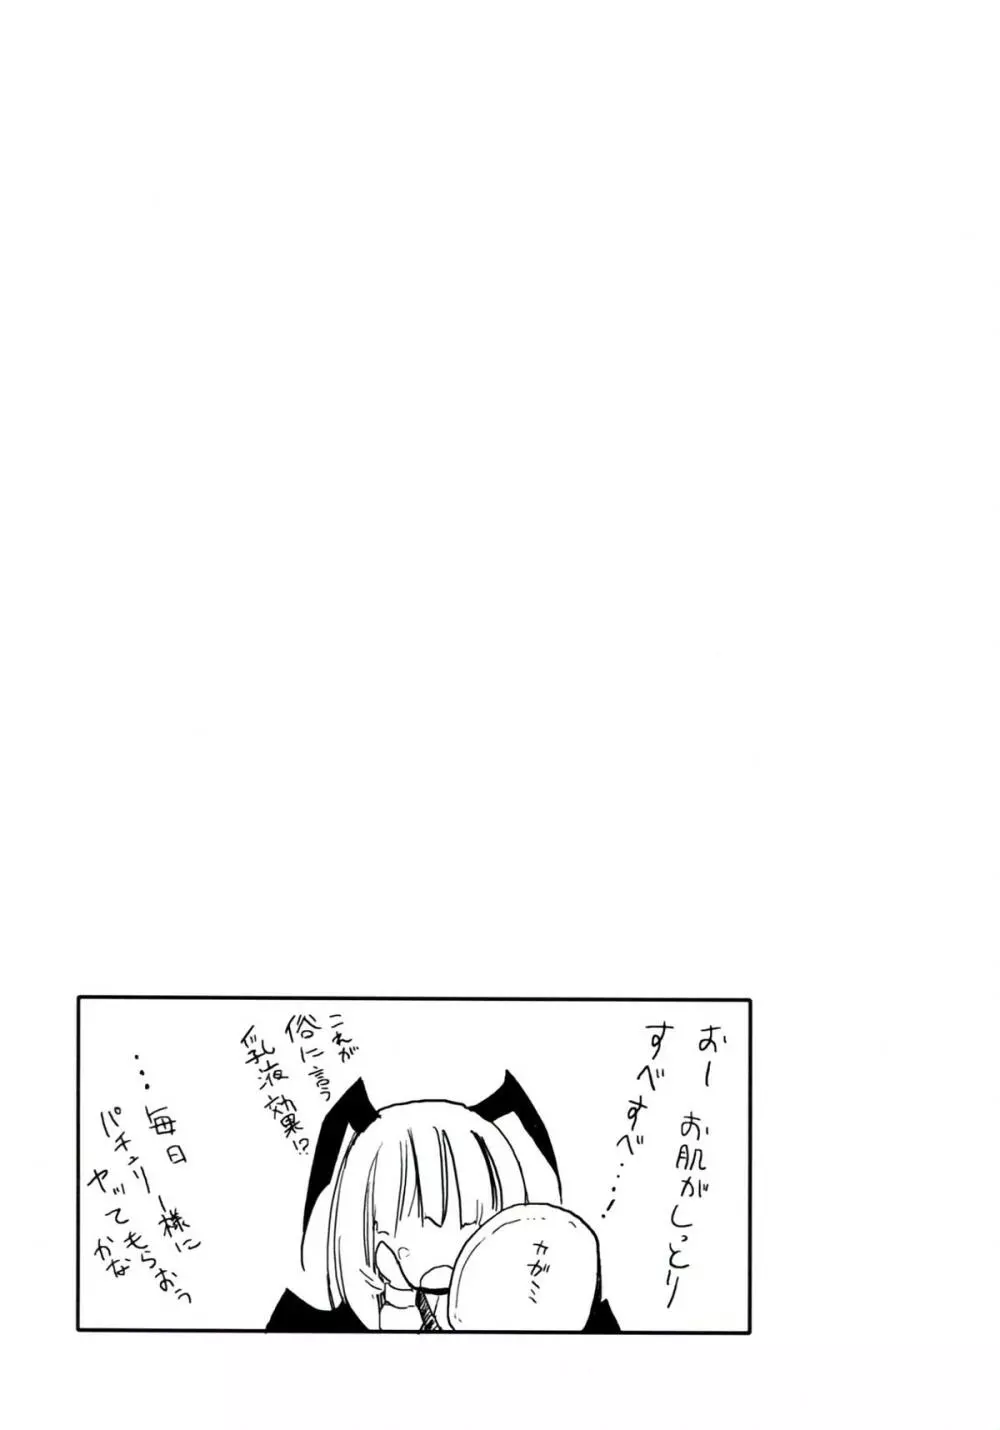 Homuraya Milk ★ Collection 2 - page67